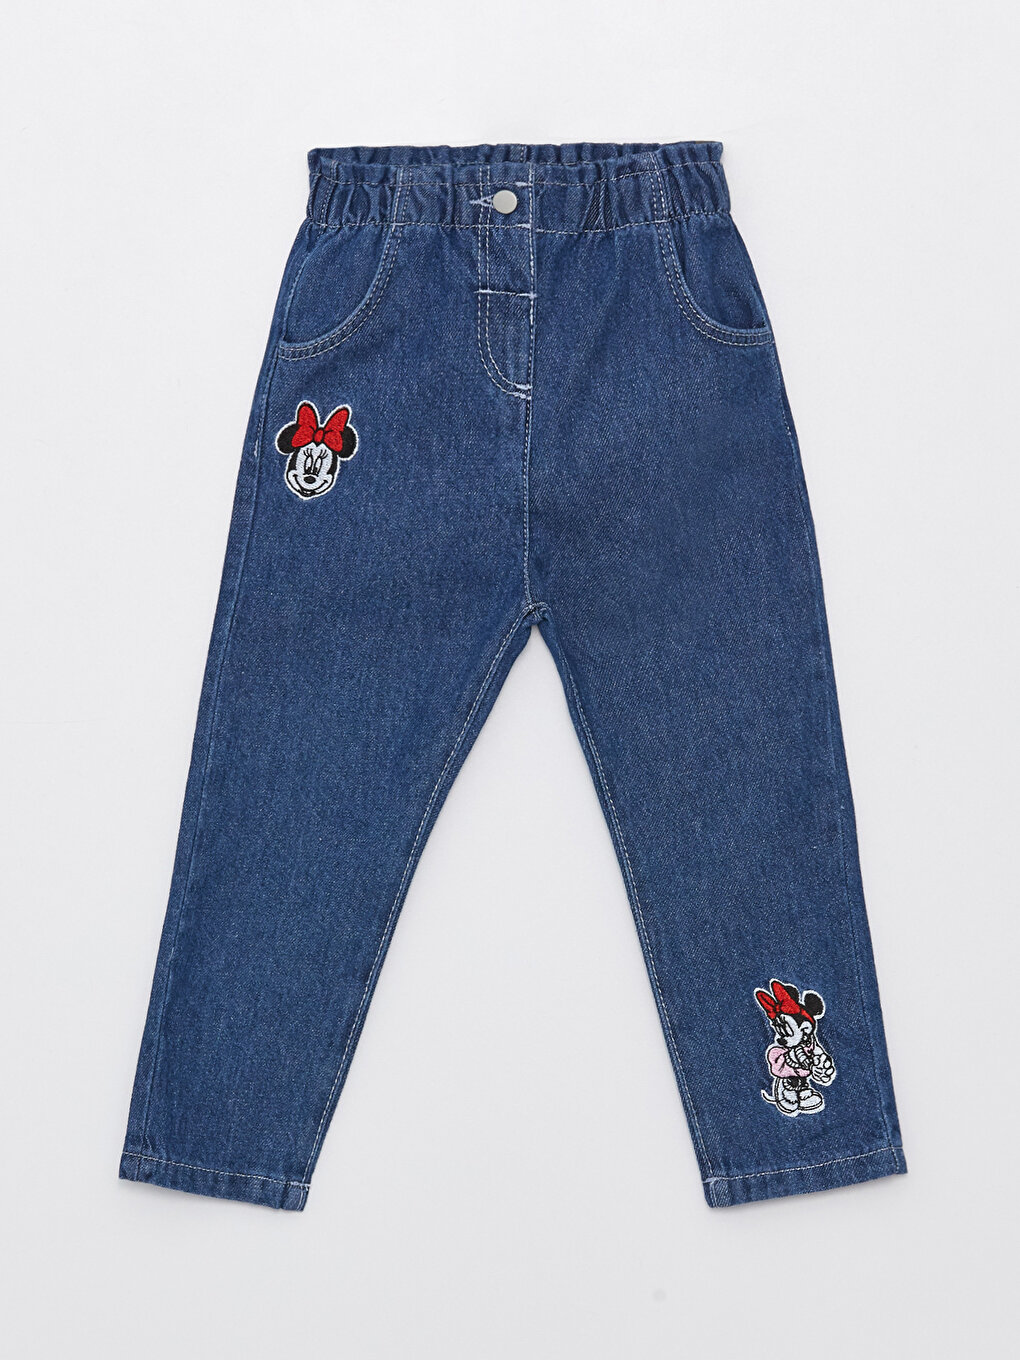 Hot Sale Kids Baby Girls Jeans Vintage Bell-bottom Trousers Wide leg Denim  Pants | eBay